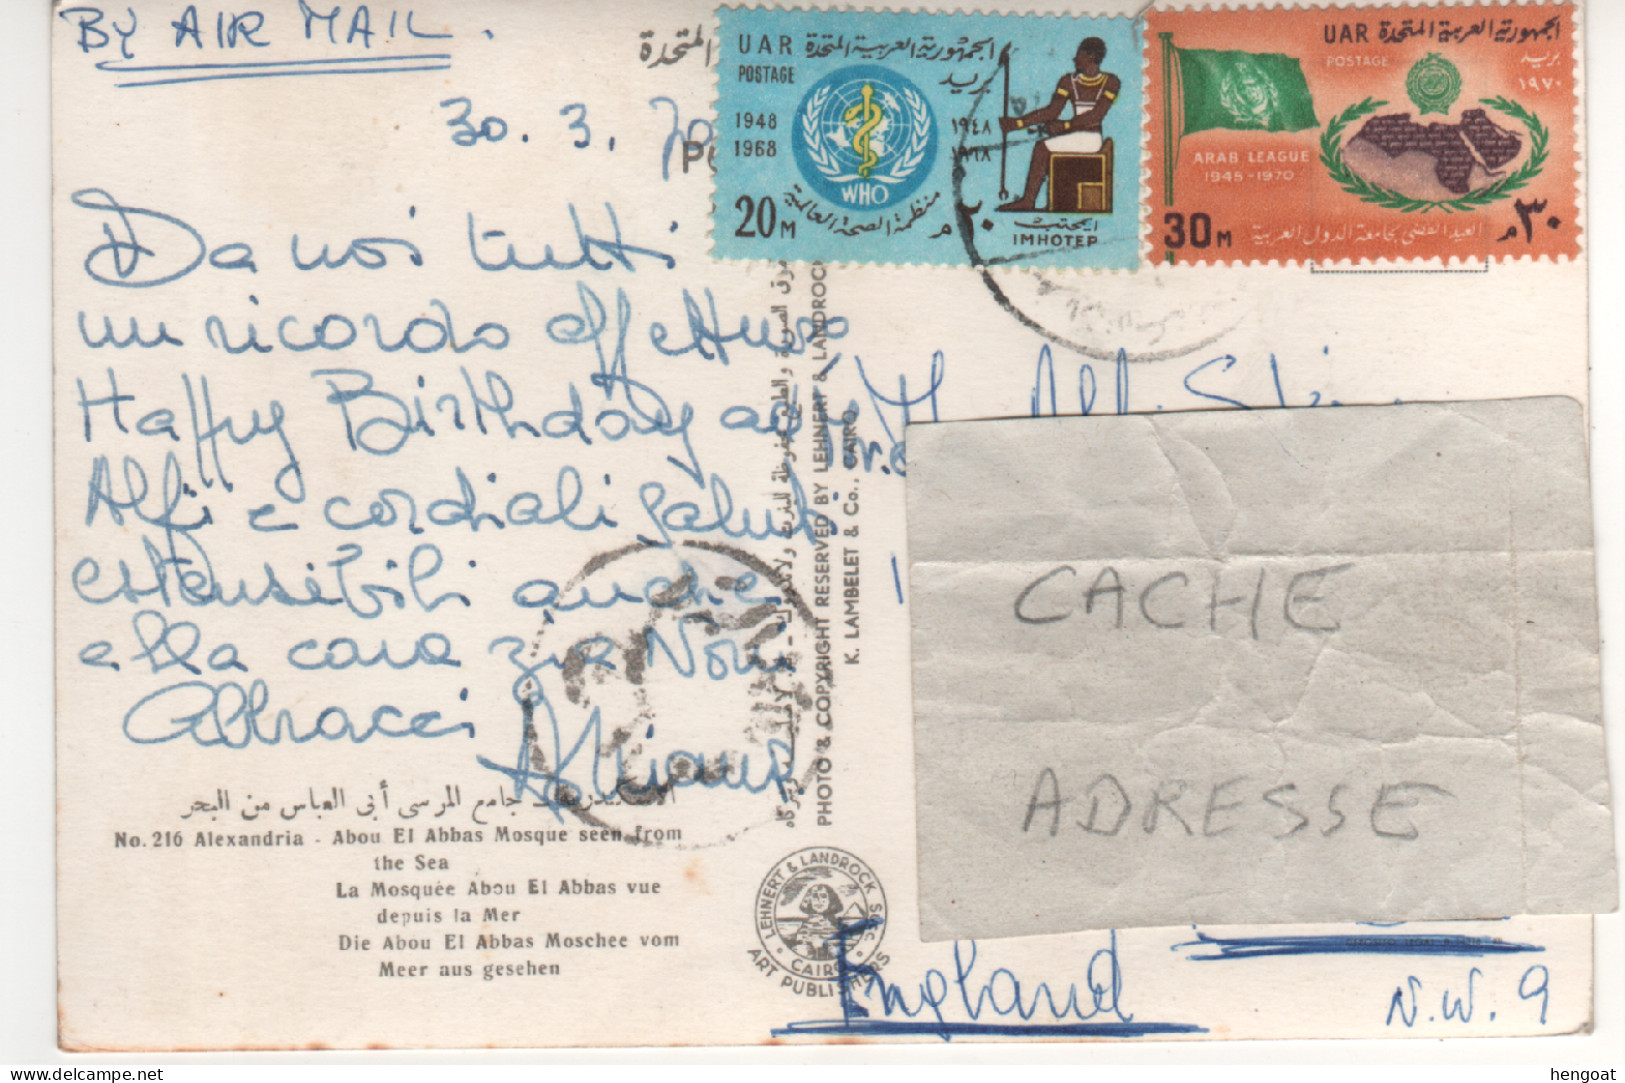 Timbres , Stamps " 1948 -1968 WHO , Imhotep ; 1945 - 1970 Ligue Arabe " Sur CP , Carte , Postcard Du 30/03/70 - Storia Postale